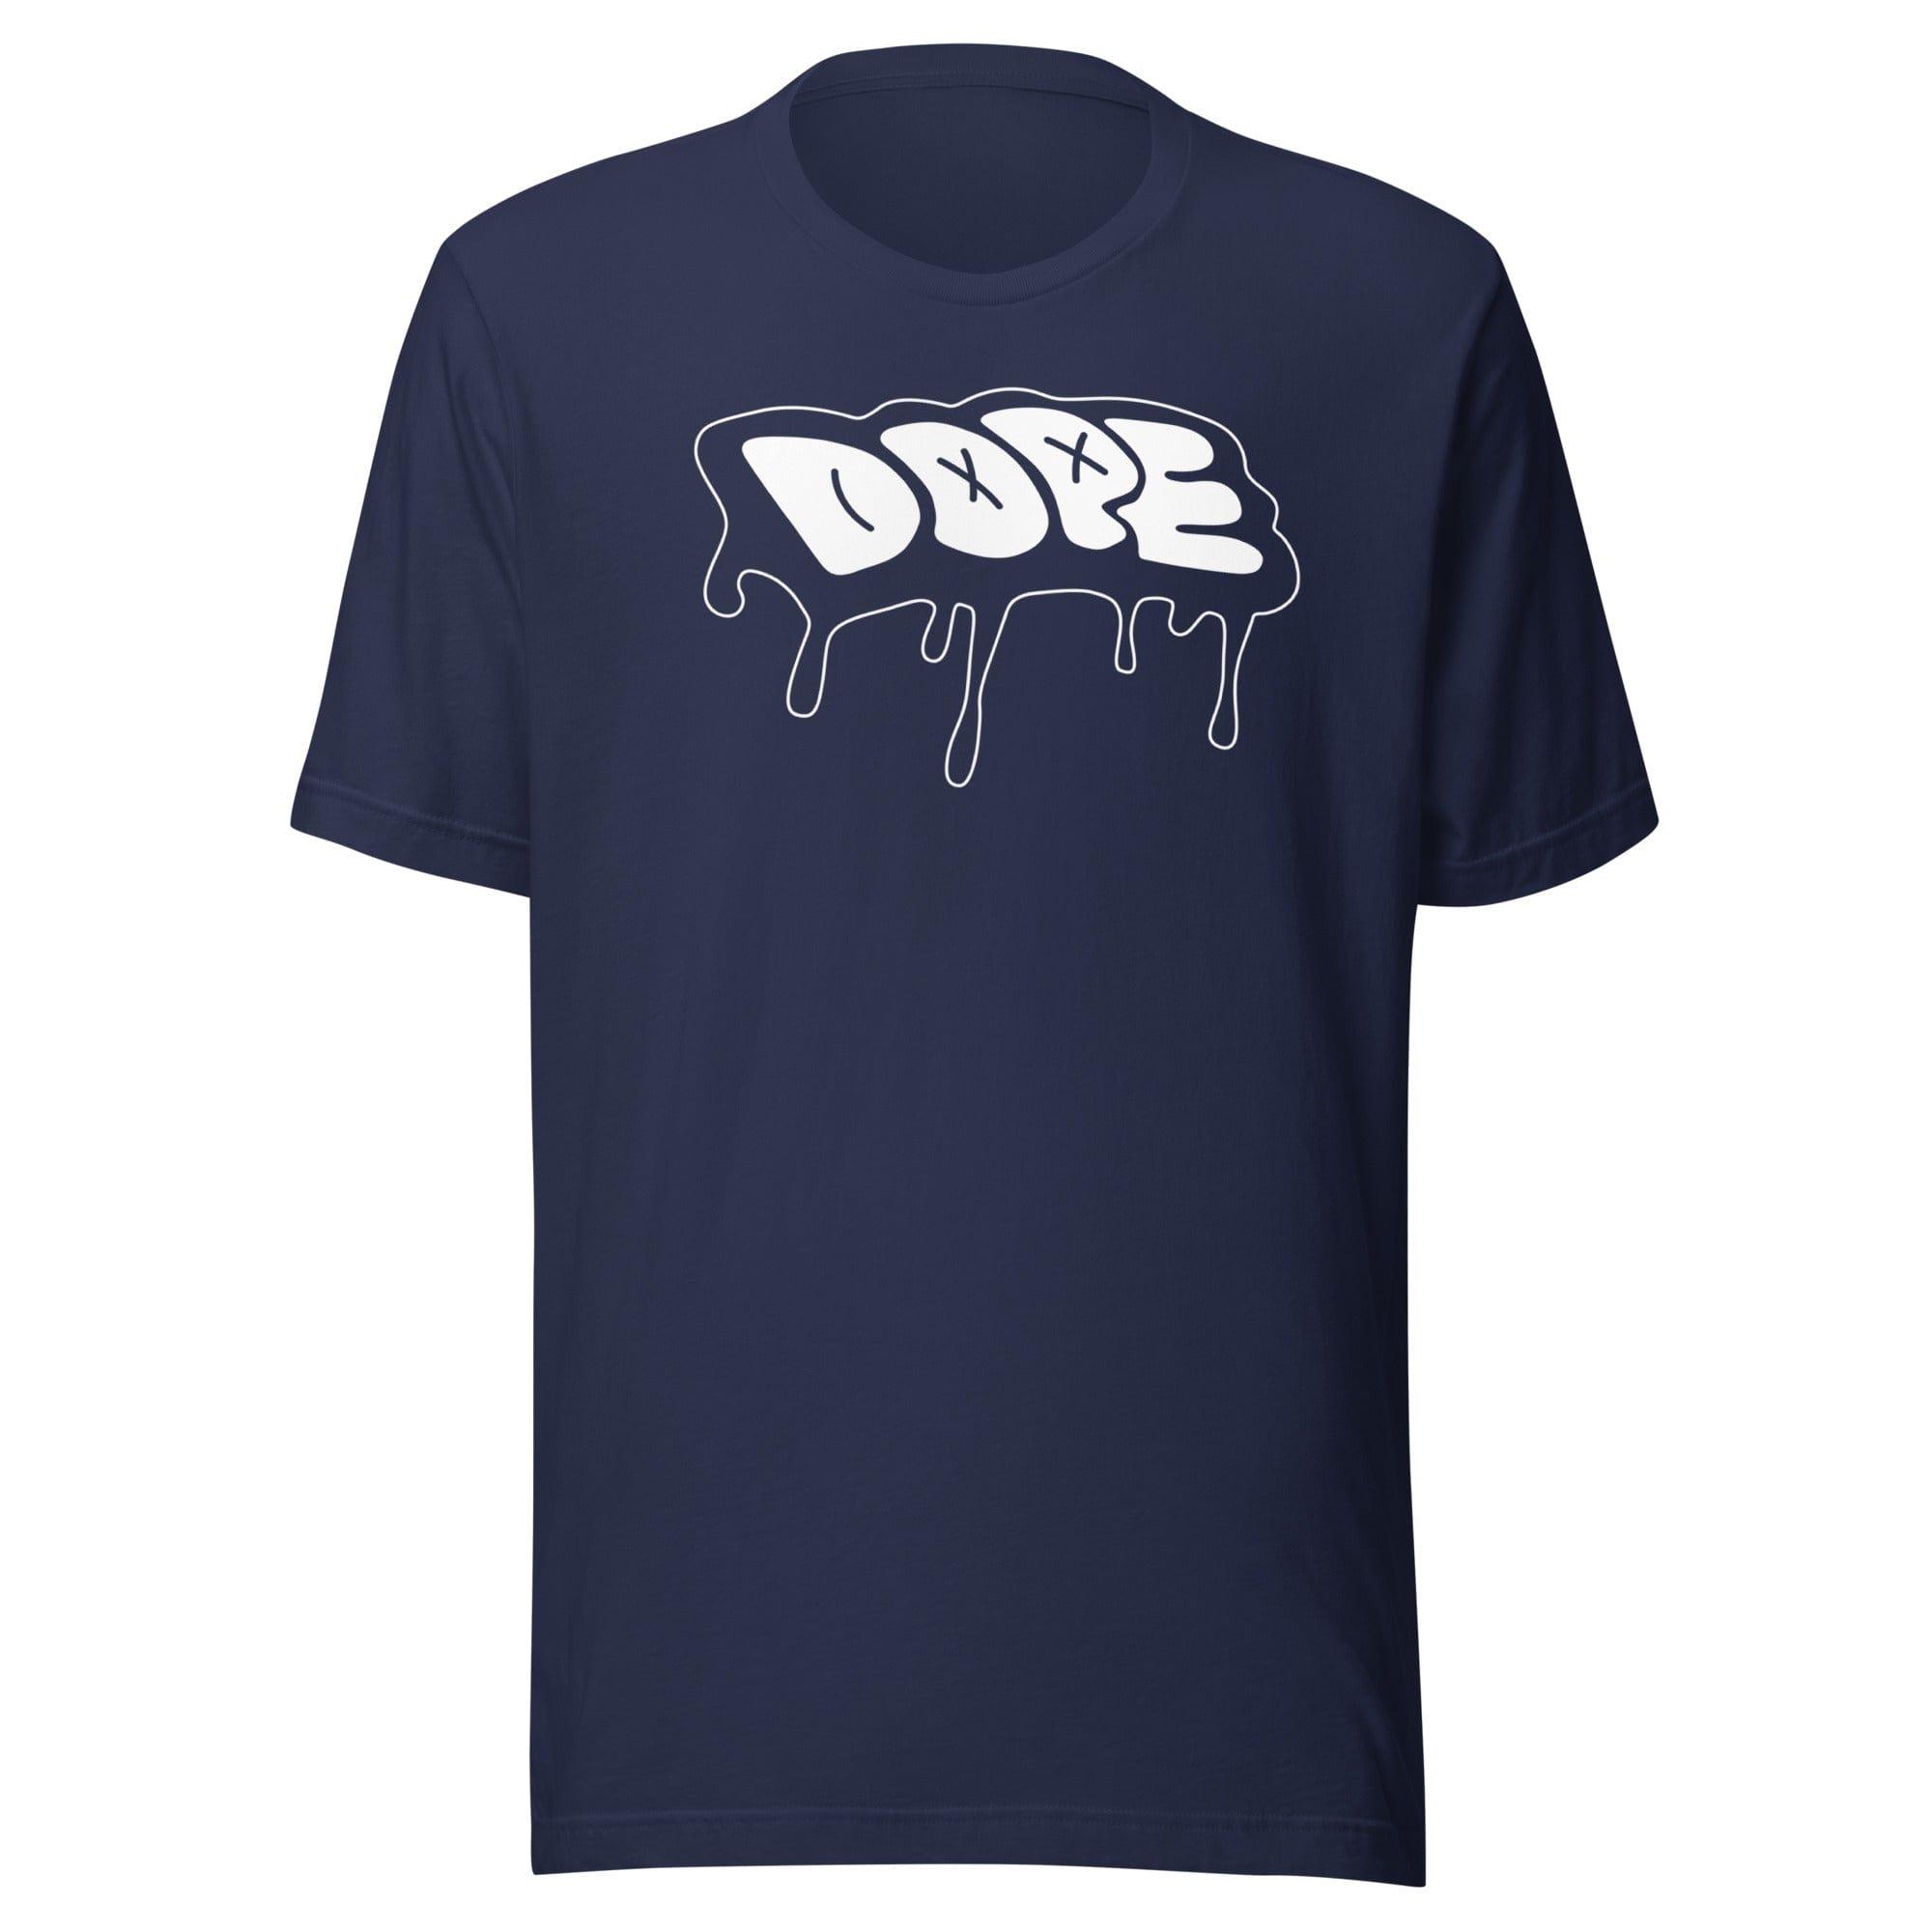 Urban Dope Series T-shirt Dripping Dope Short Sleeve Unisex Top - TopKoalaTee